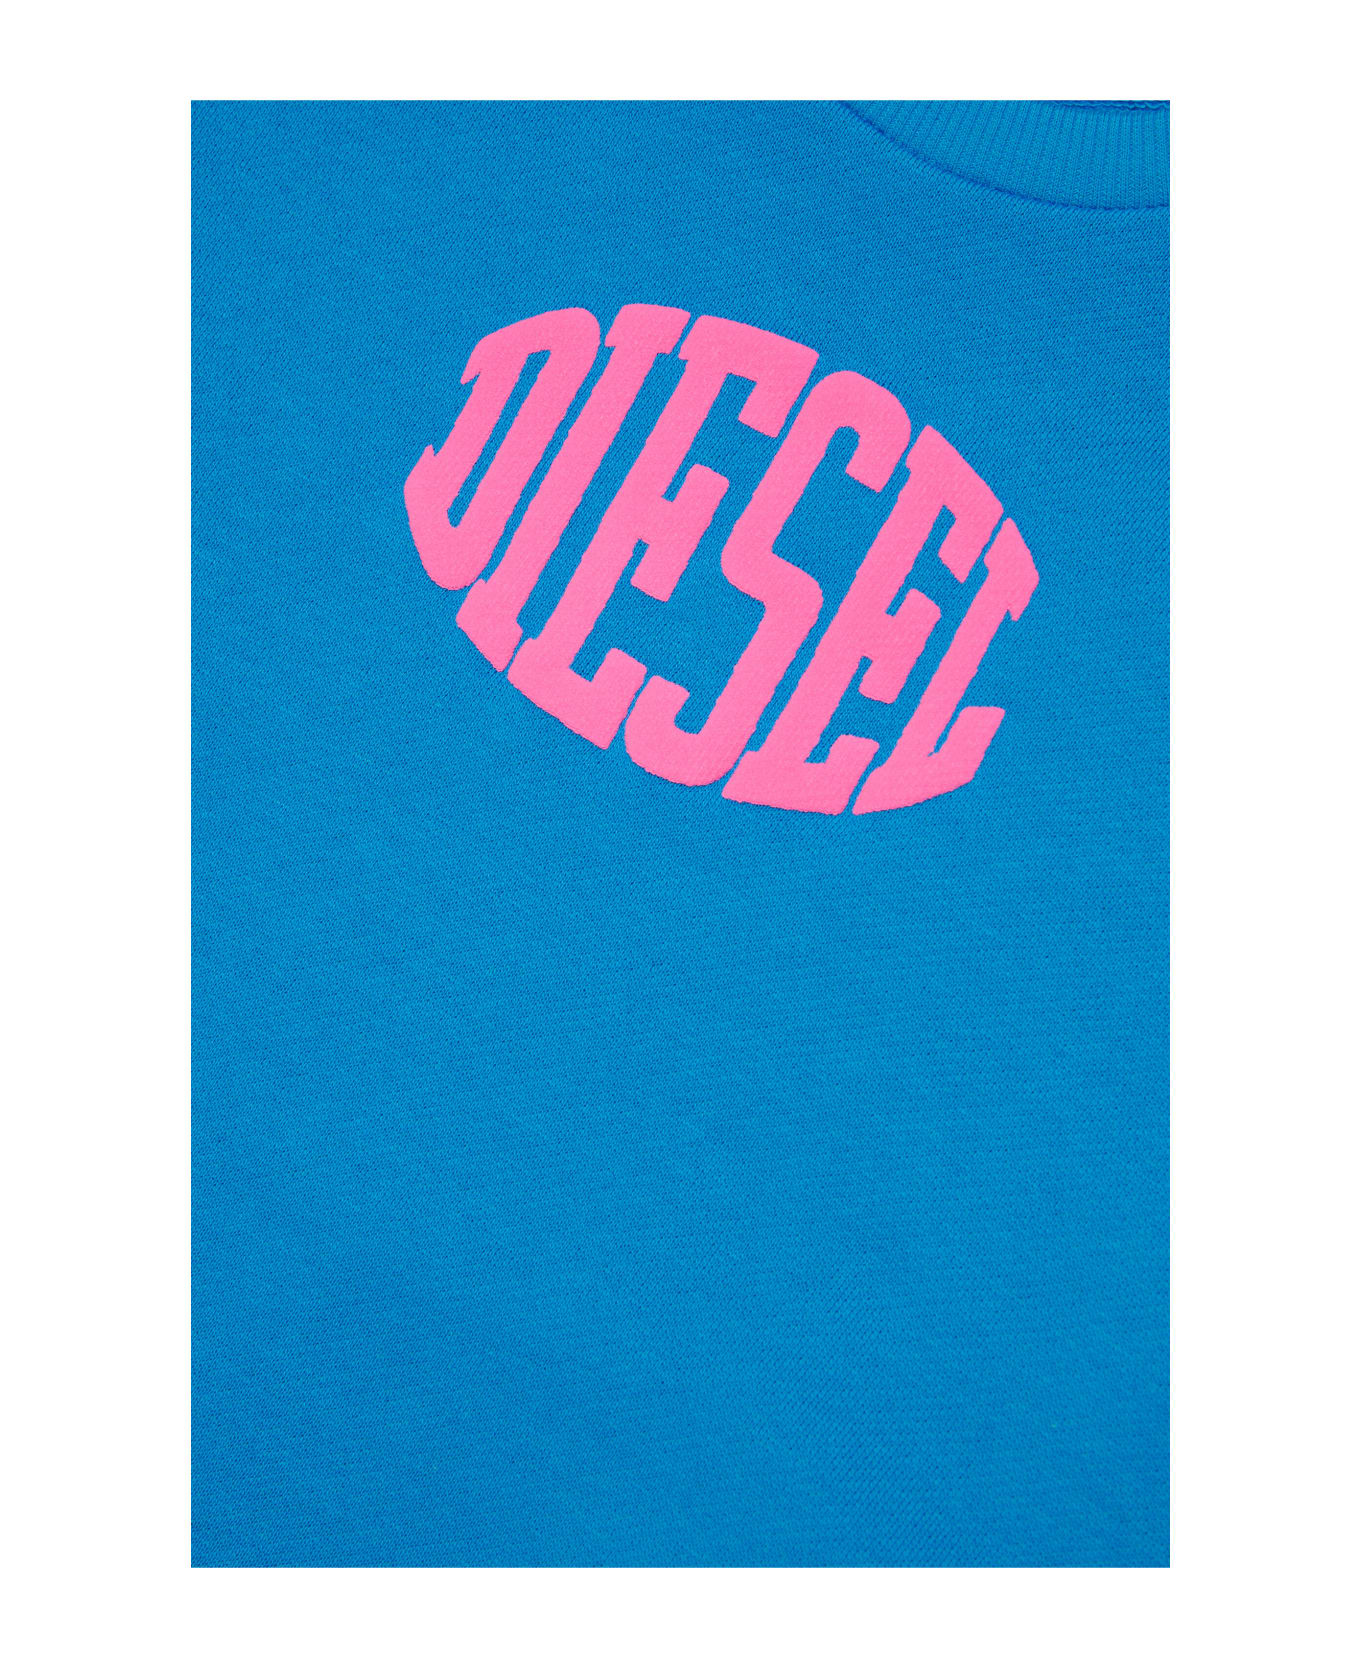 Diesel Siwi Sweat-shirt Diesel Crew-neck Sweatshirt With Puffy Print